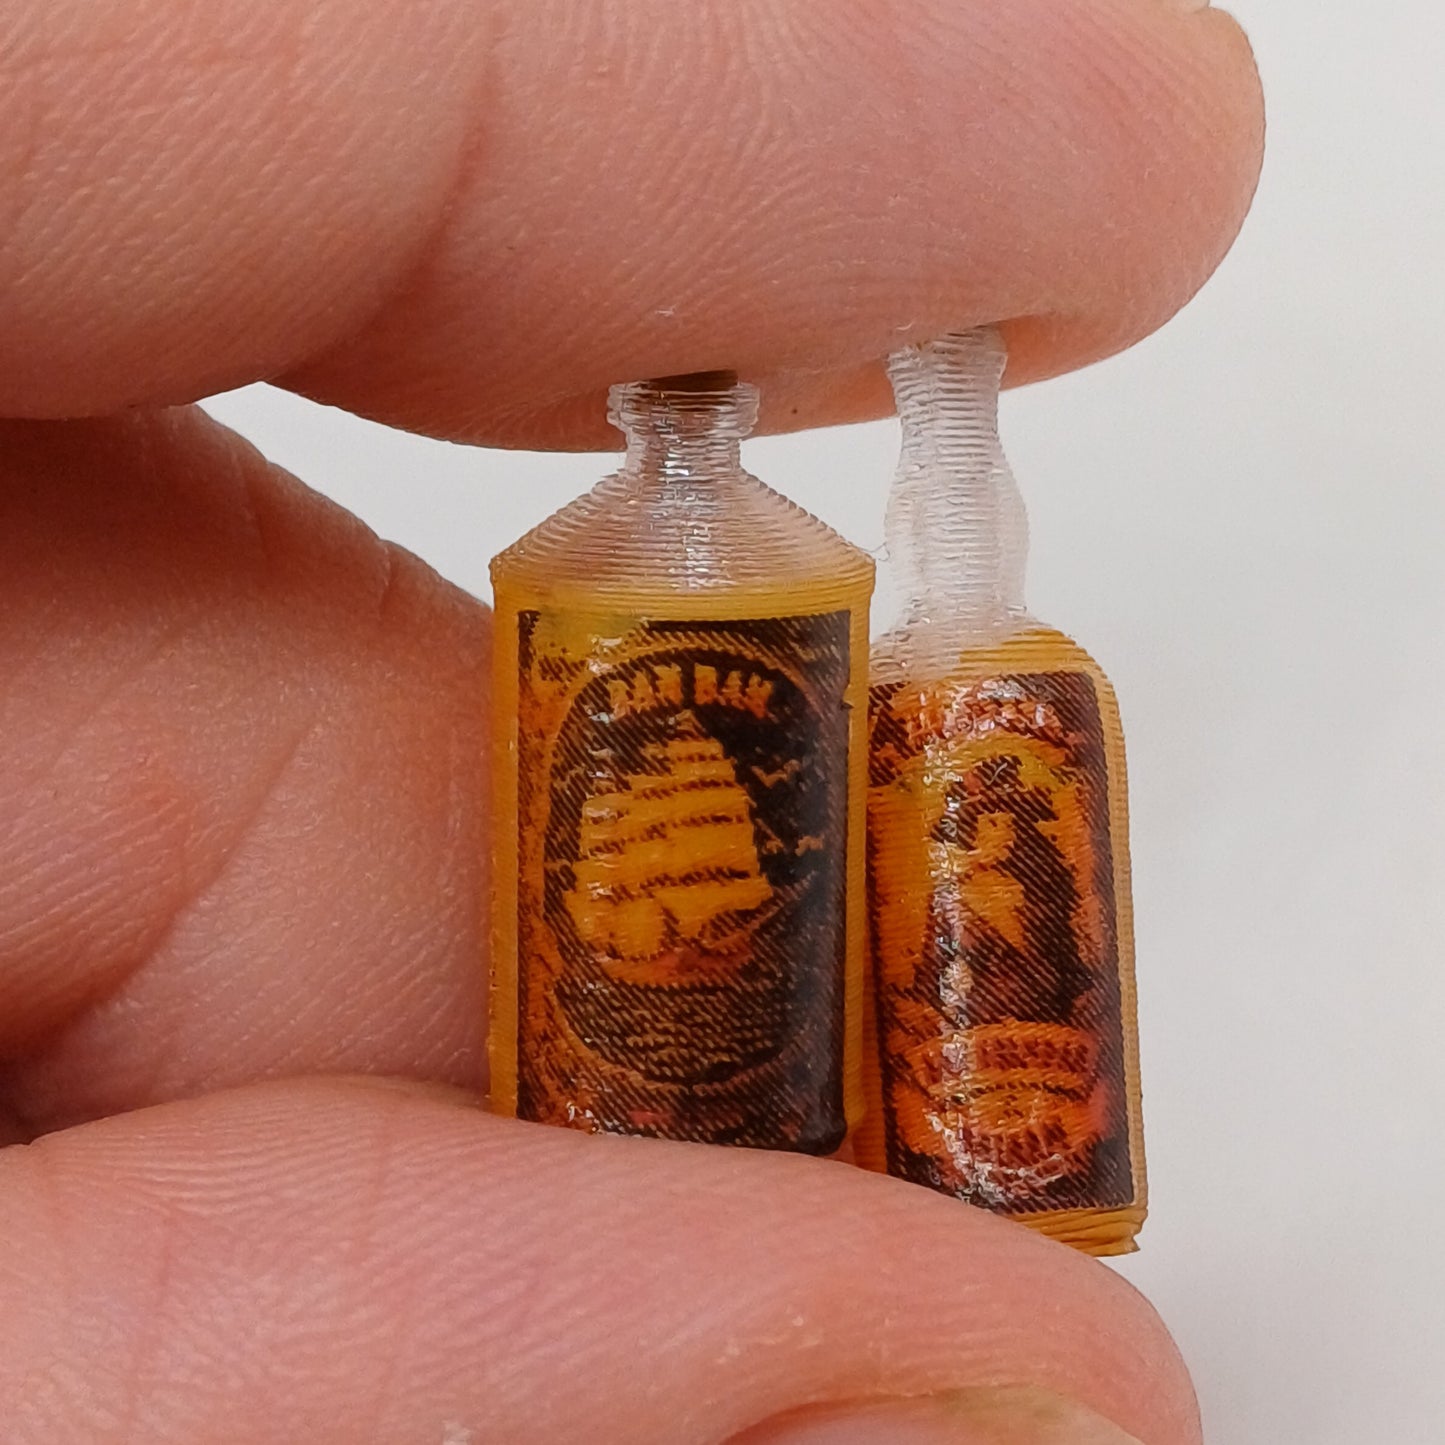 1:12 scale Miniatures Alcohol Bottles